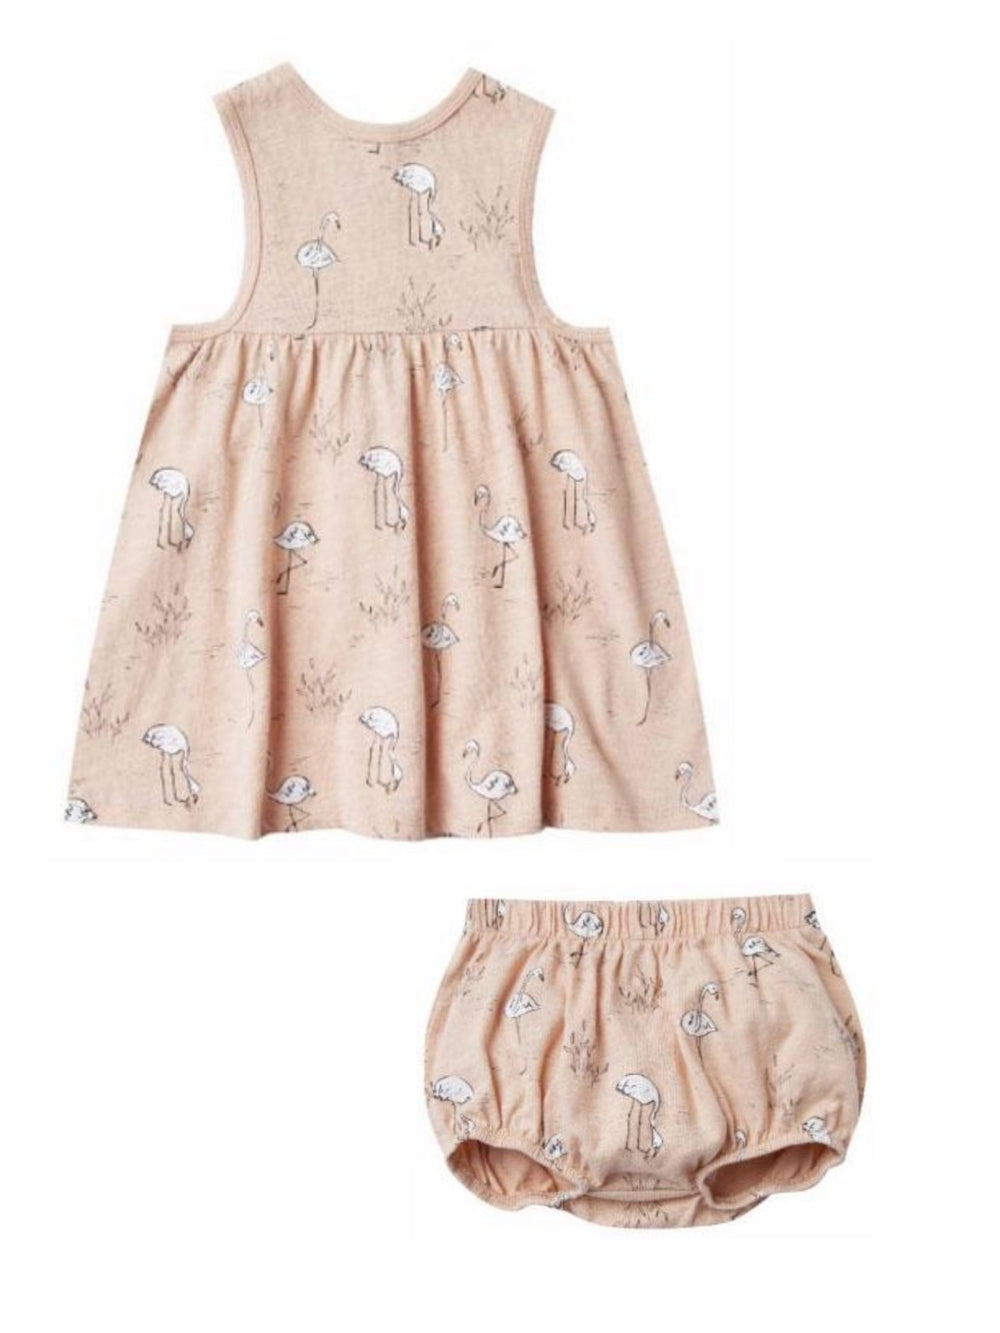 Flamingos Lyla mini dress & flamingos bloomer